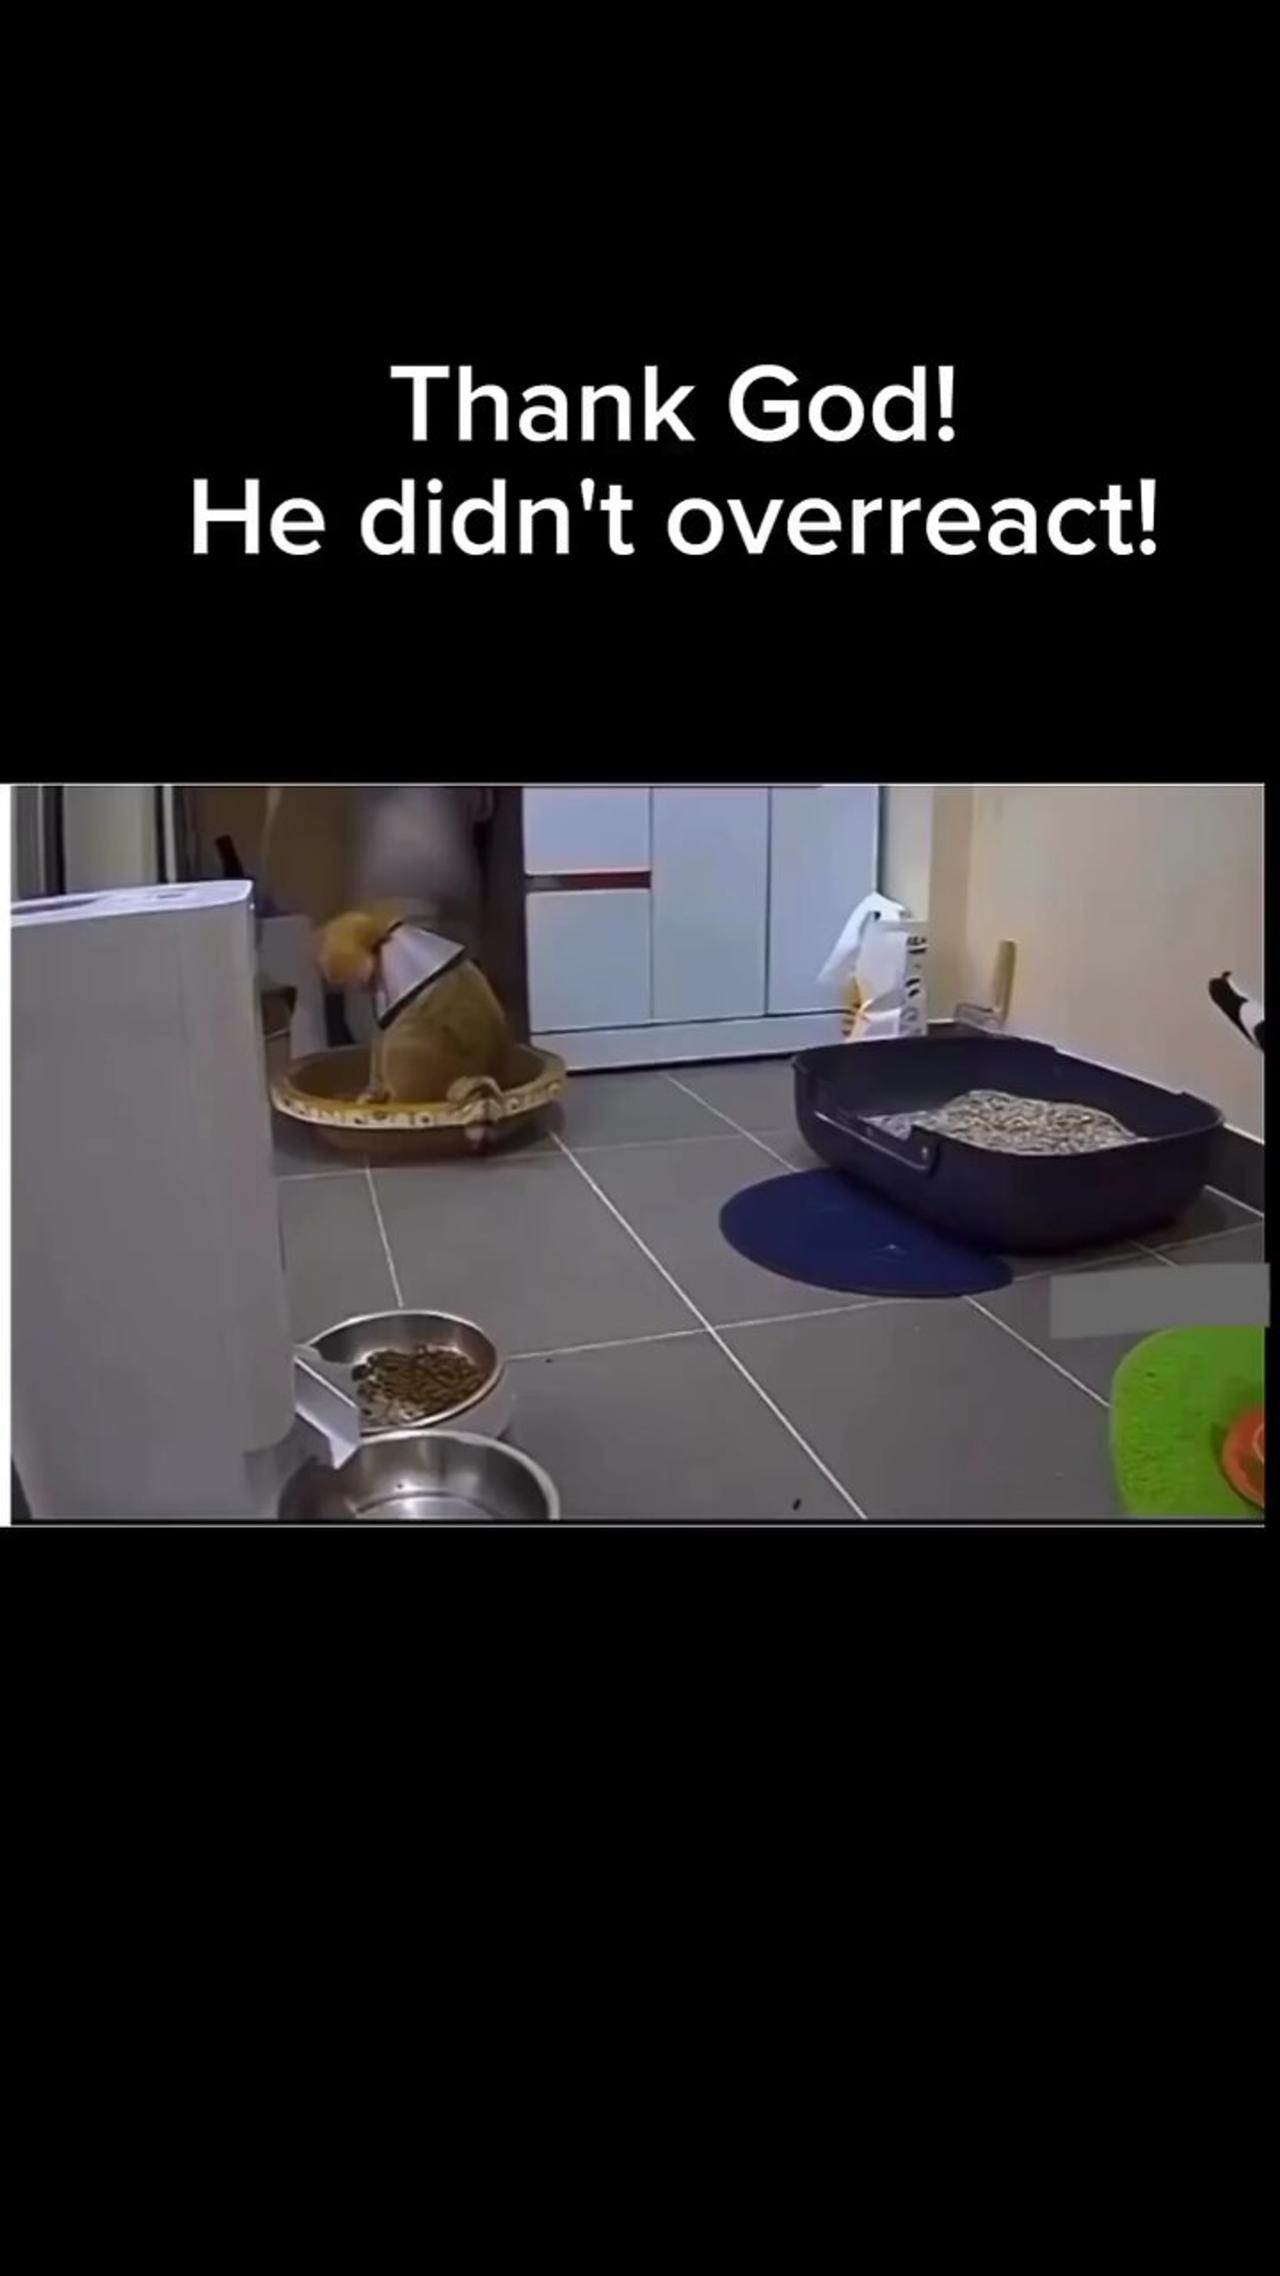 Overreacting by cat!